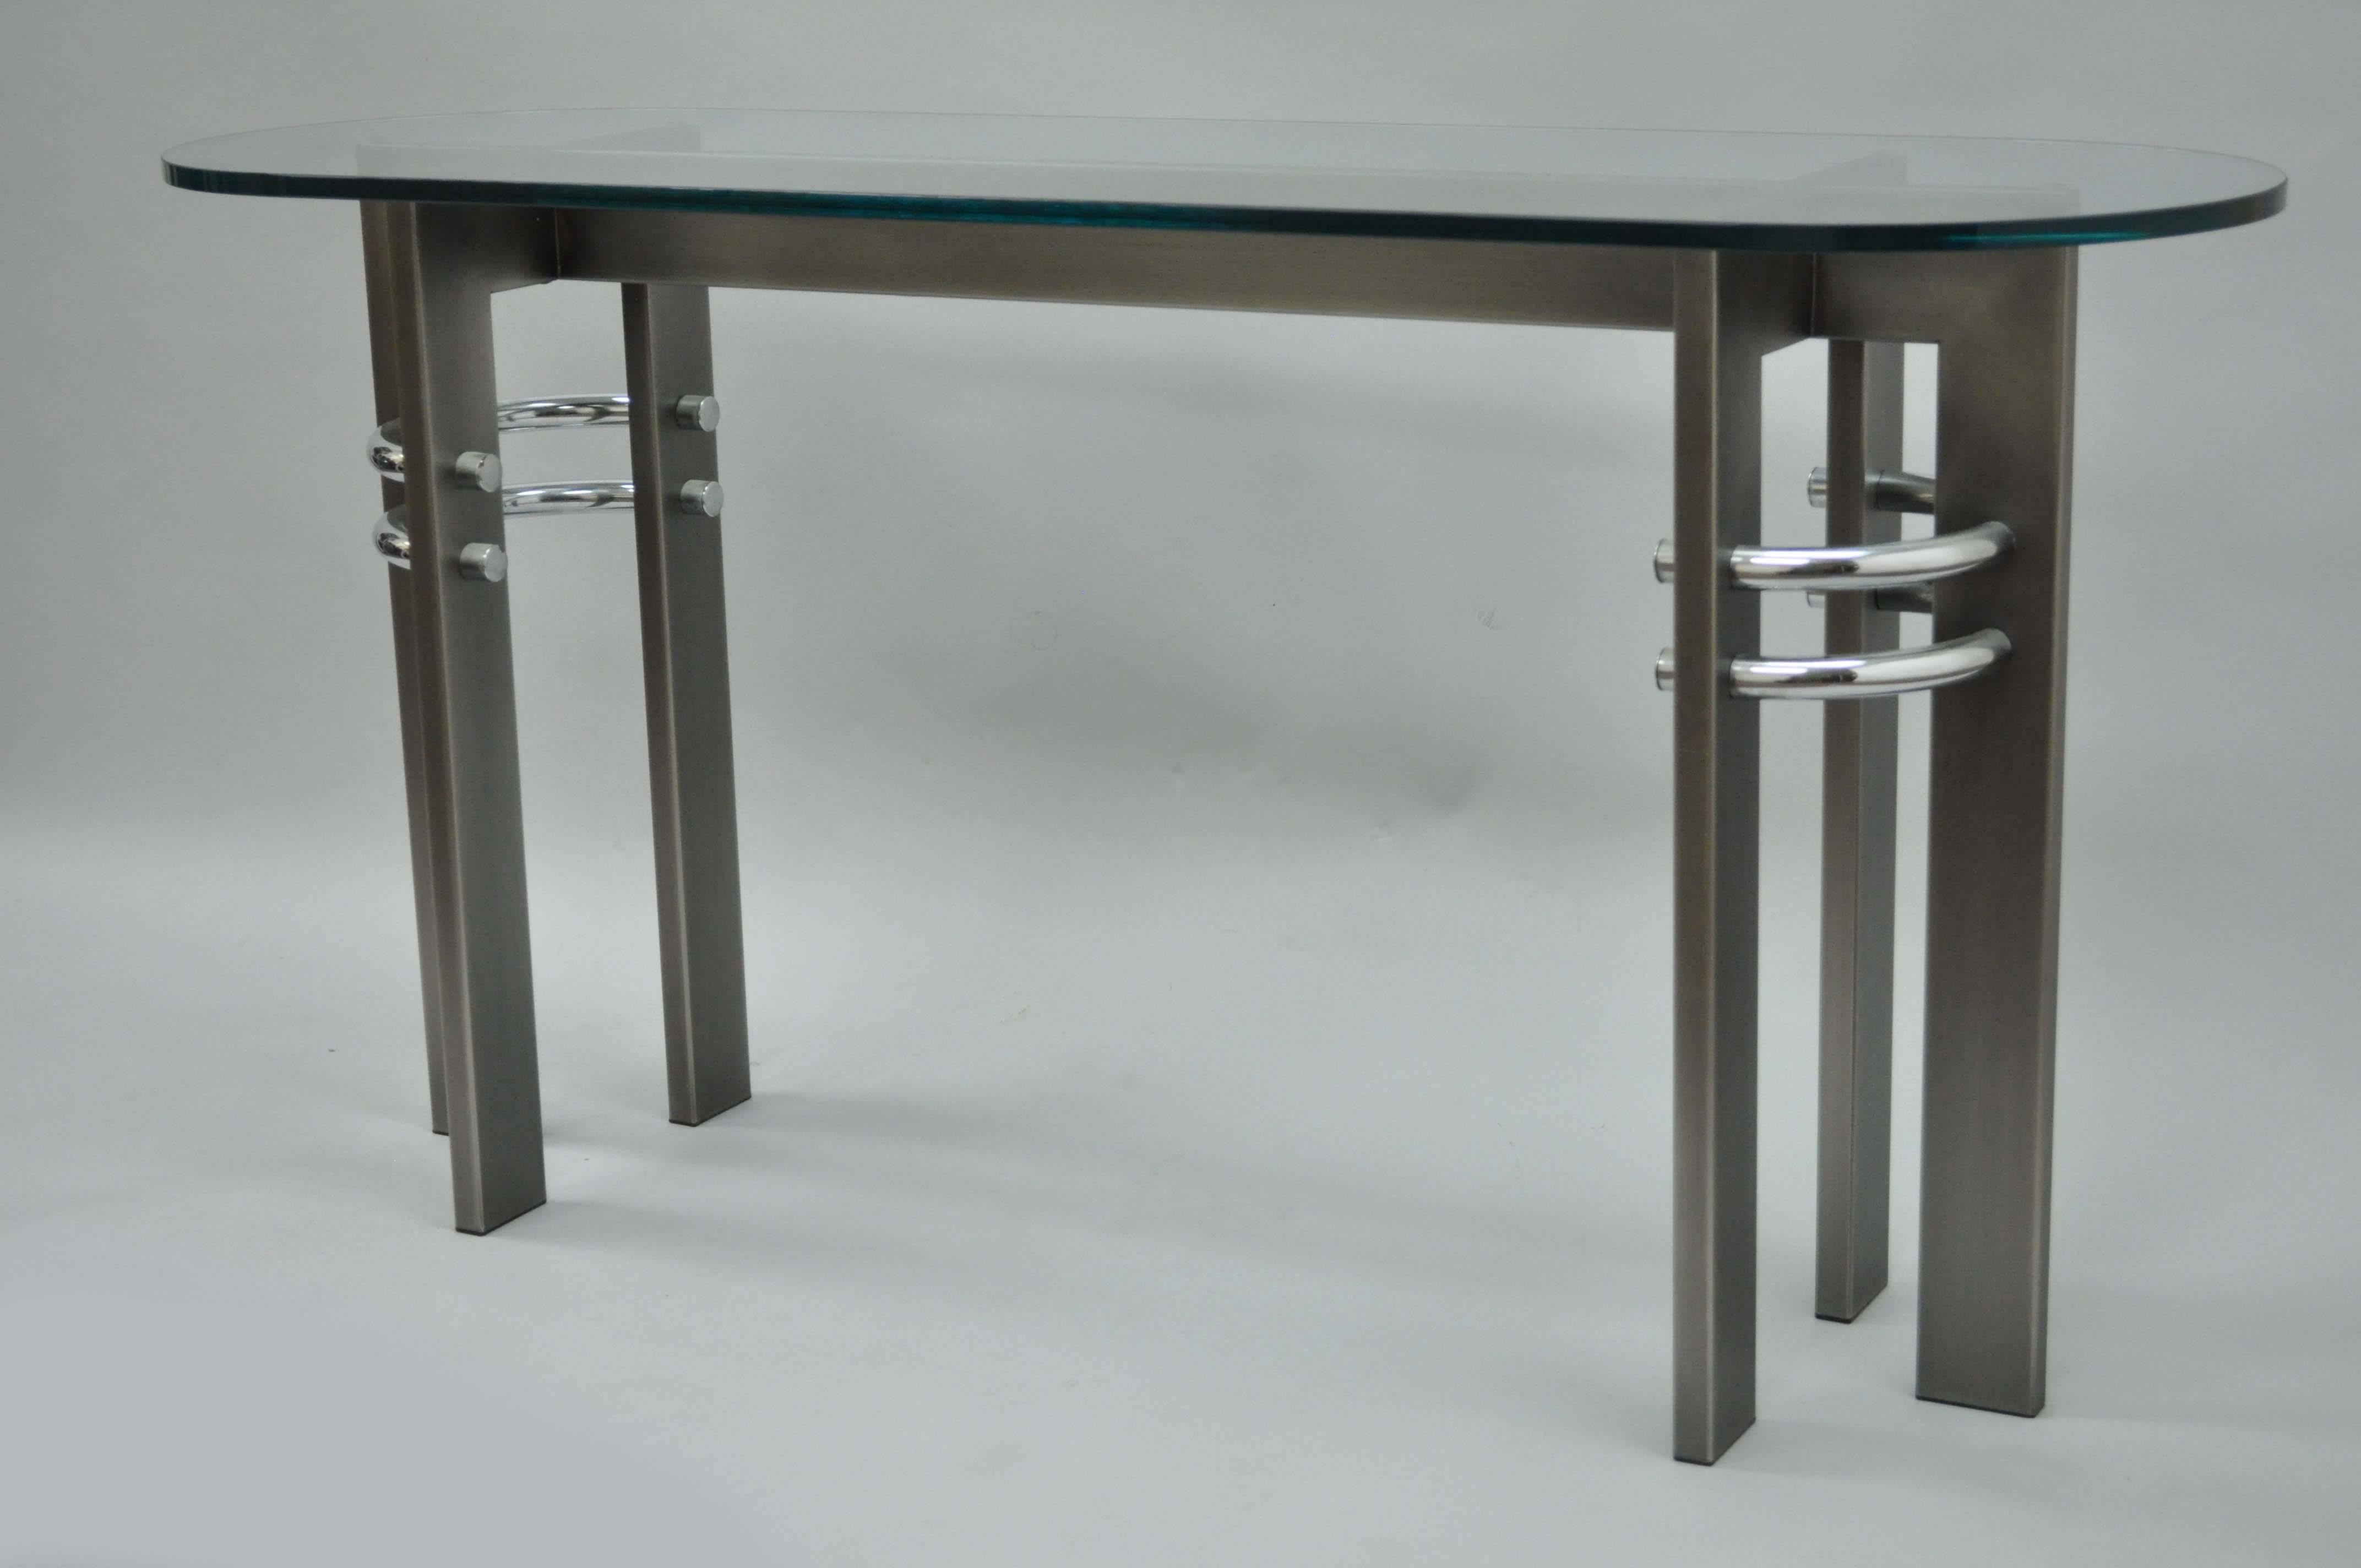 American Design Institute of America DIA Brushed Metal, Chrome & Glass Console Sofa Table